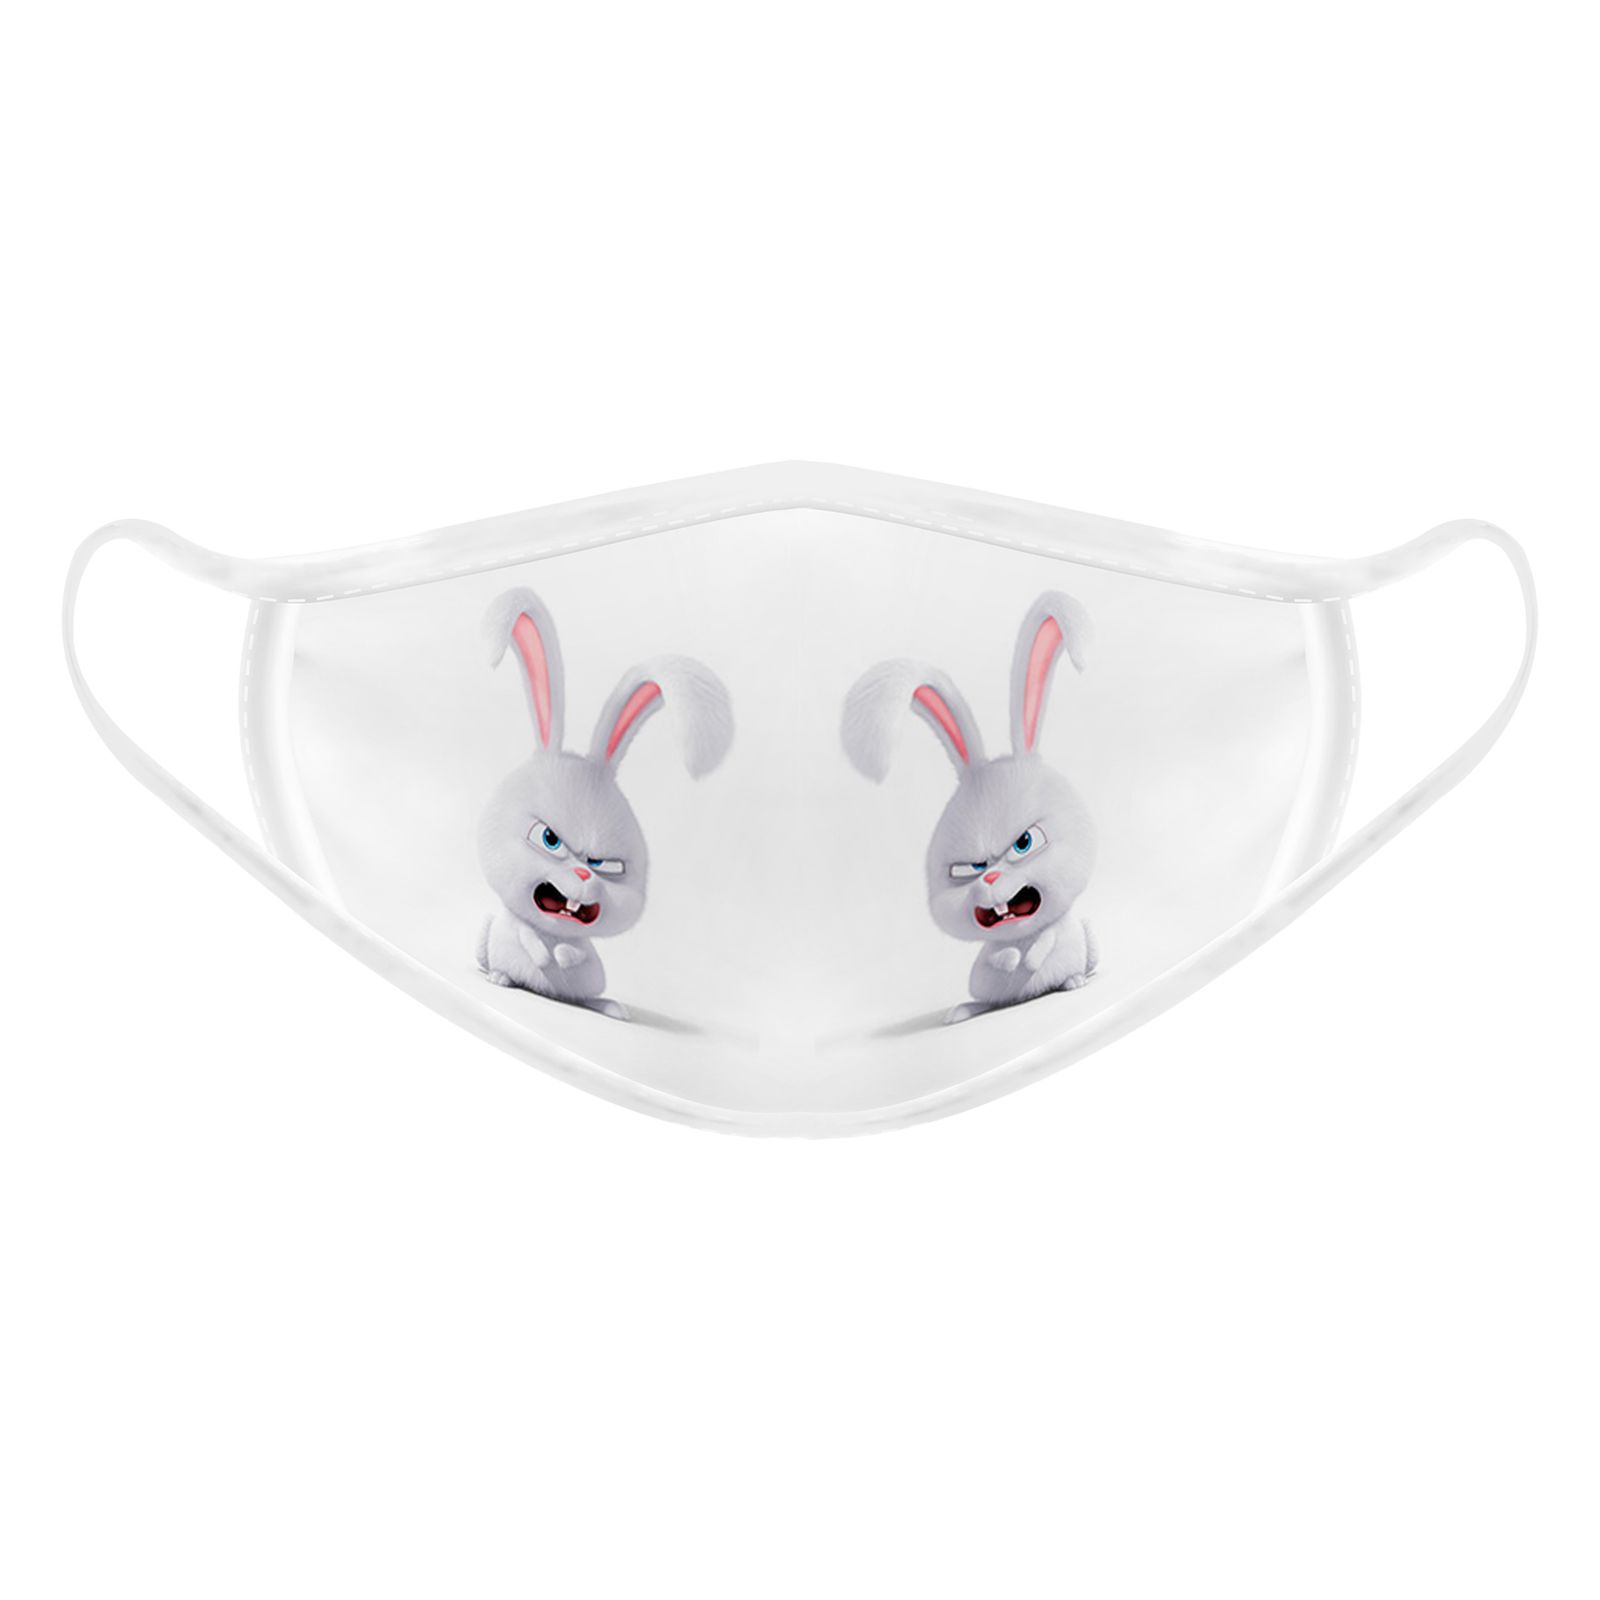 ماسک تزیینی صورت بچگانه طرح خرگوش عصبانی کد 617015 -  - 1